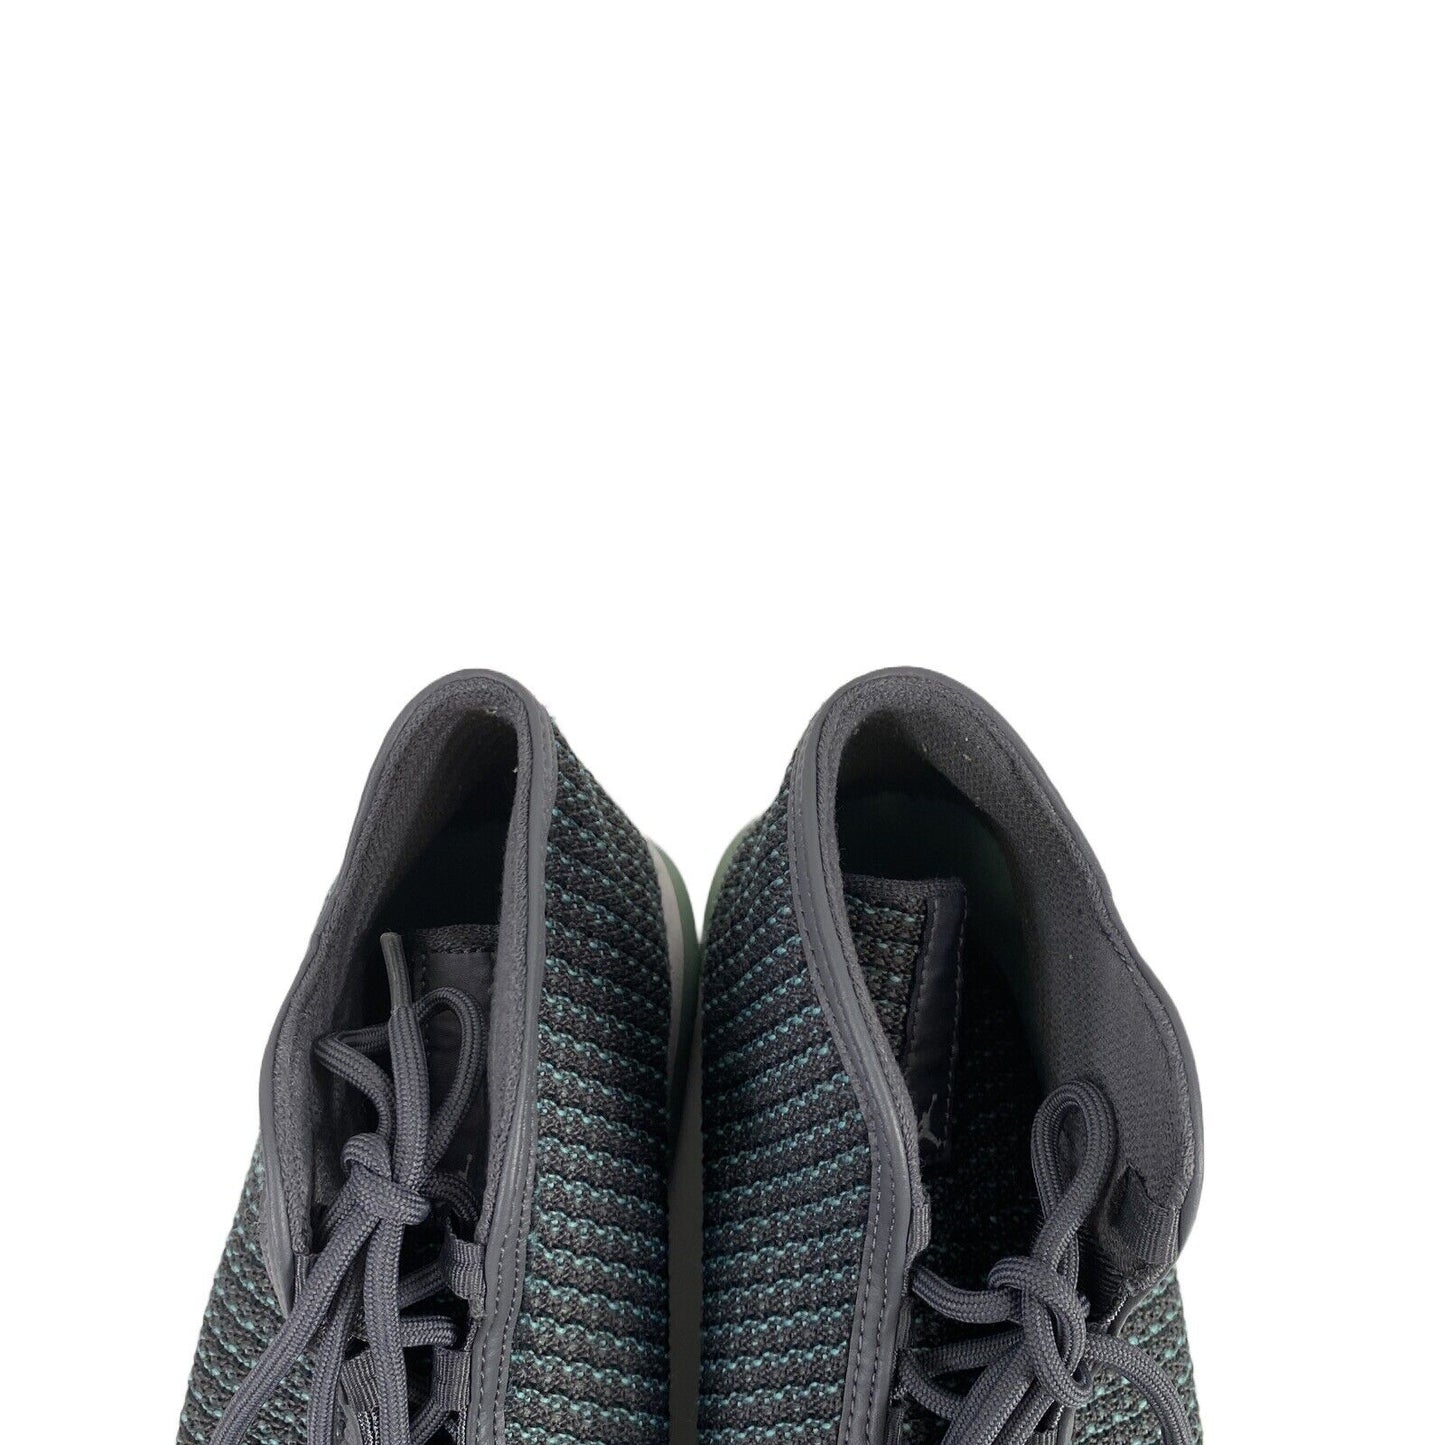 Nike Jordan Men's Gray/Blue Horizon 823581 Lace Up Athletic Shoes - 10.5